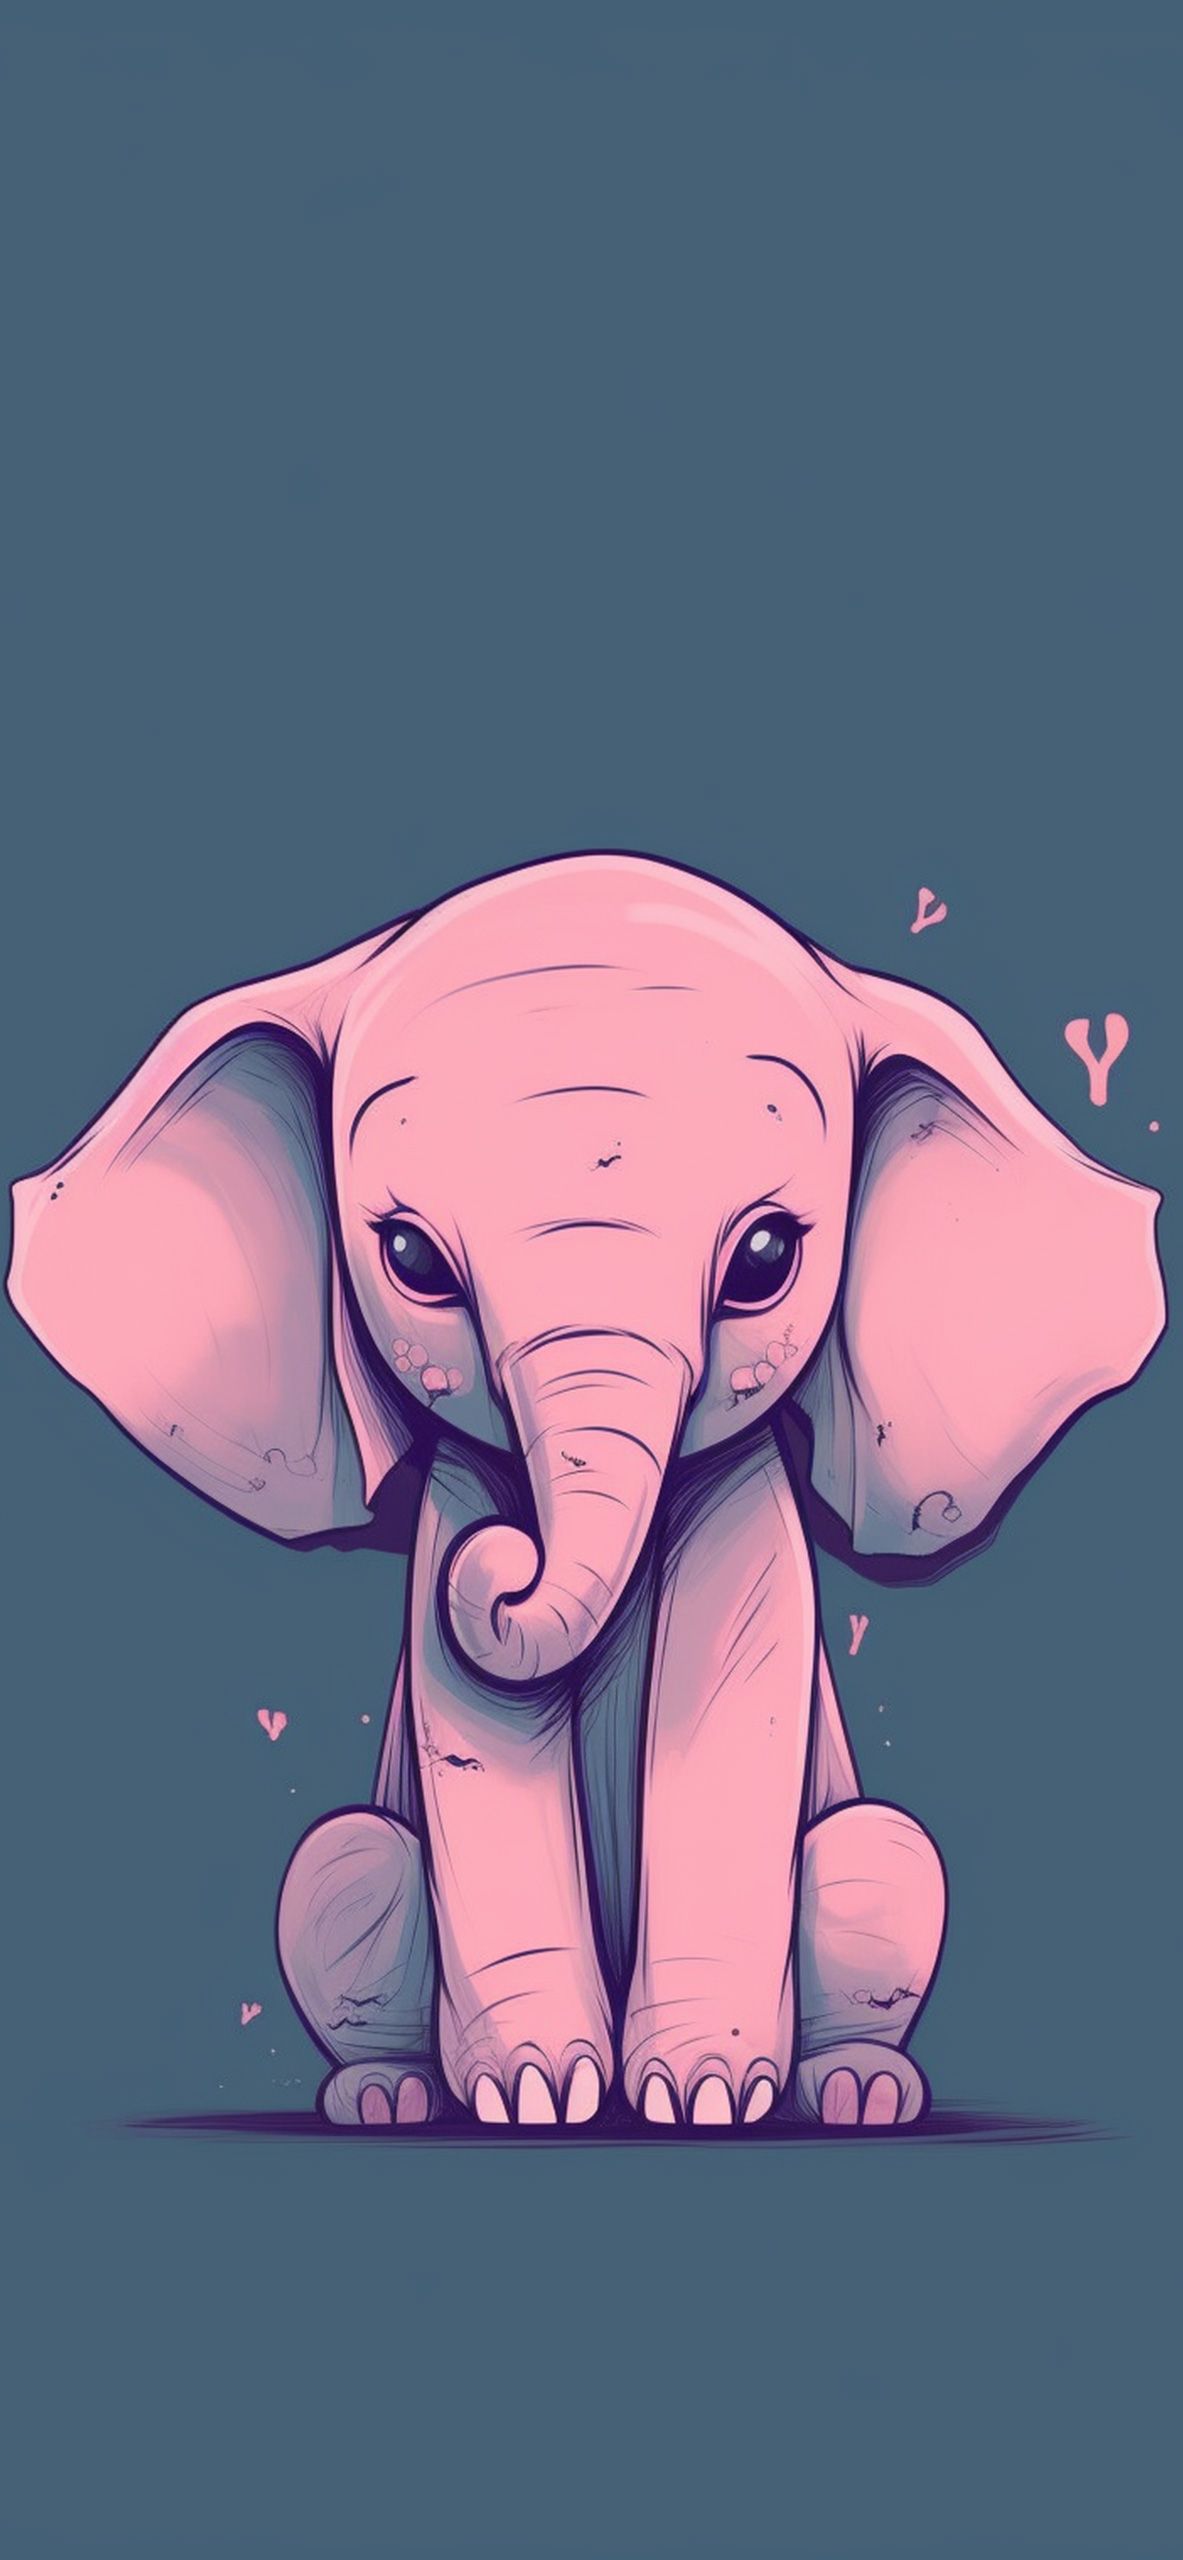 A pink baby elephant with a blue background - Elephant